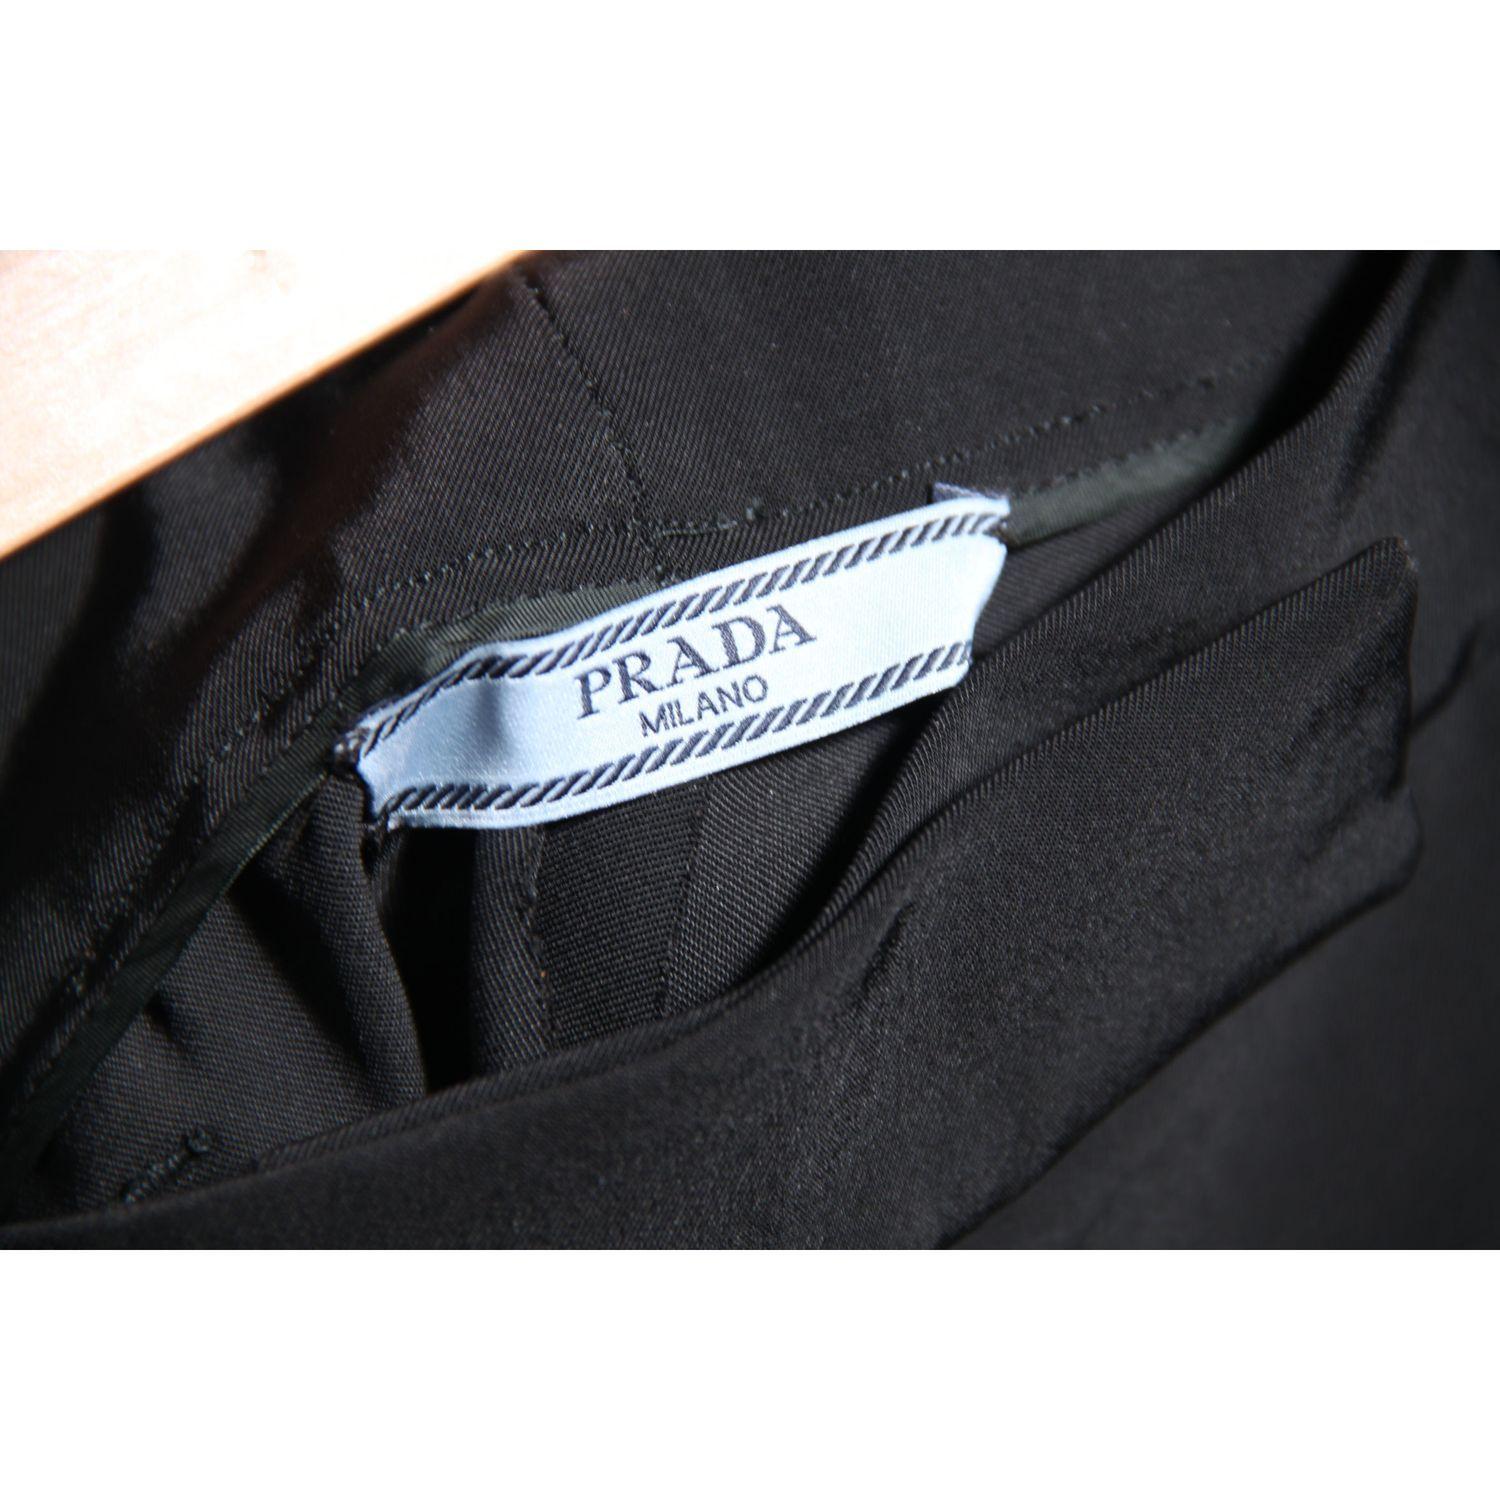 Prada Black Poly Techno Fabric Tailored Trousers Pants Size 42 3